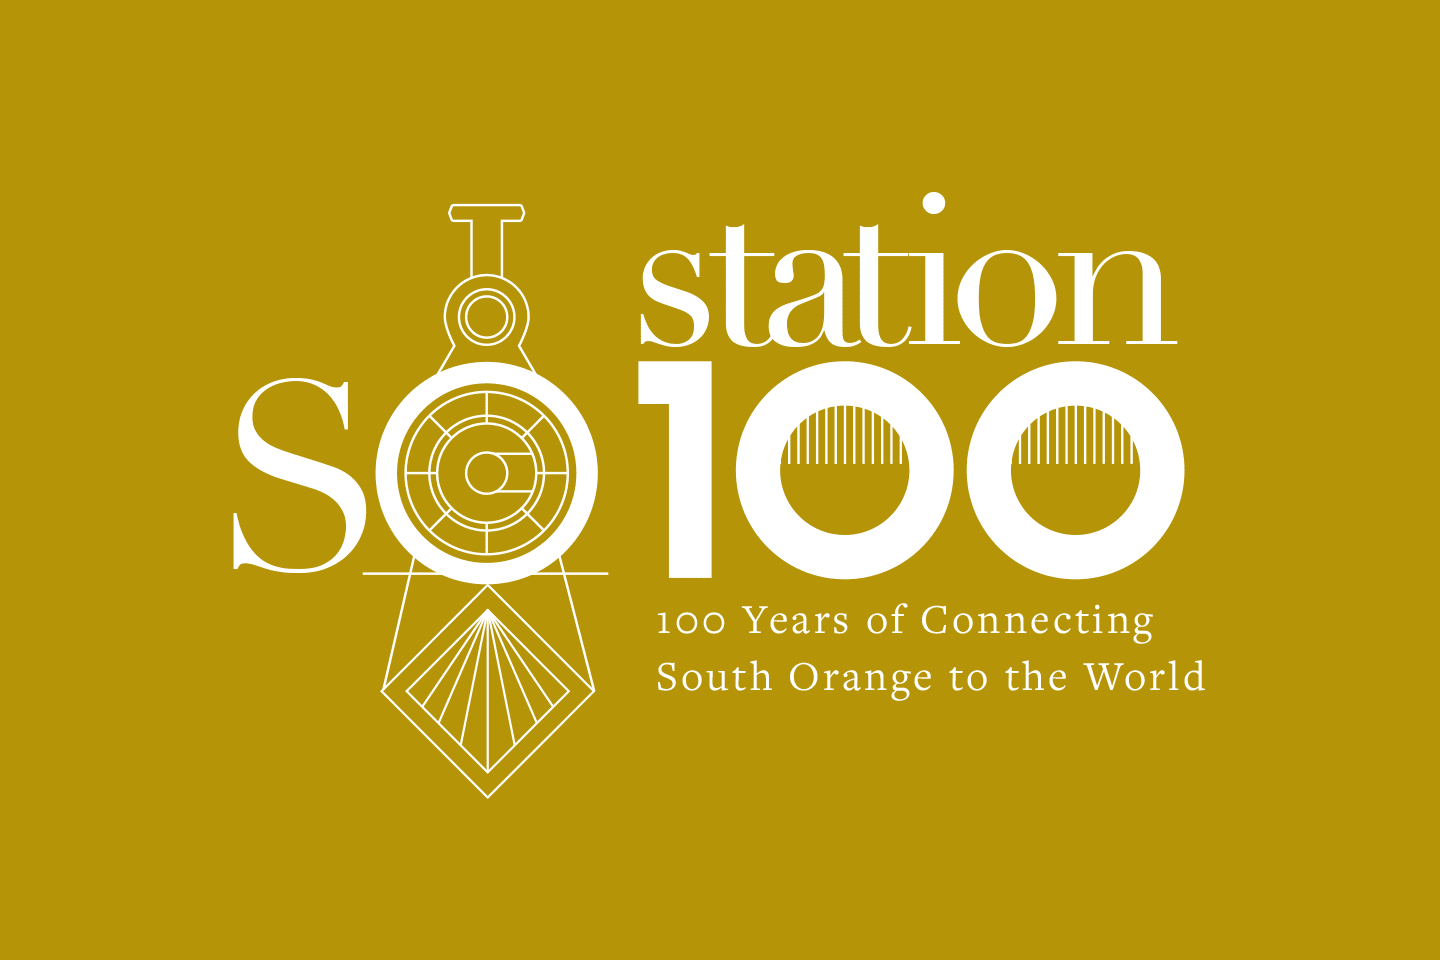 Century Station Logo - SO Station - Websites, Brand Development, Marketing, Digital ...